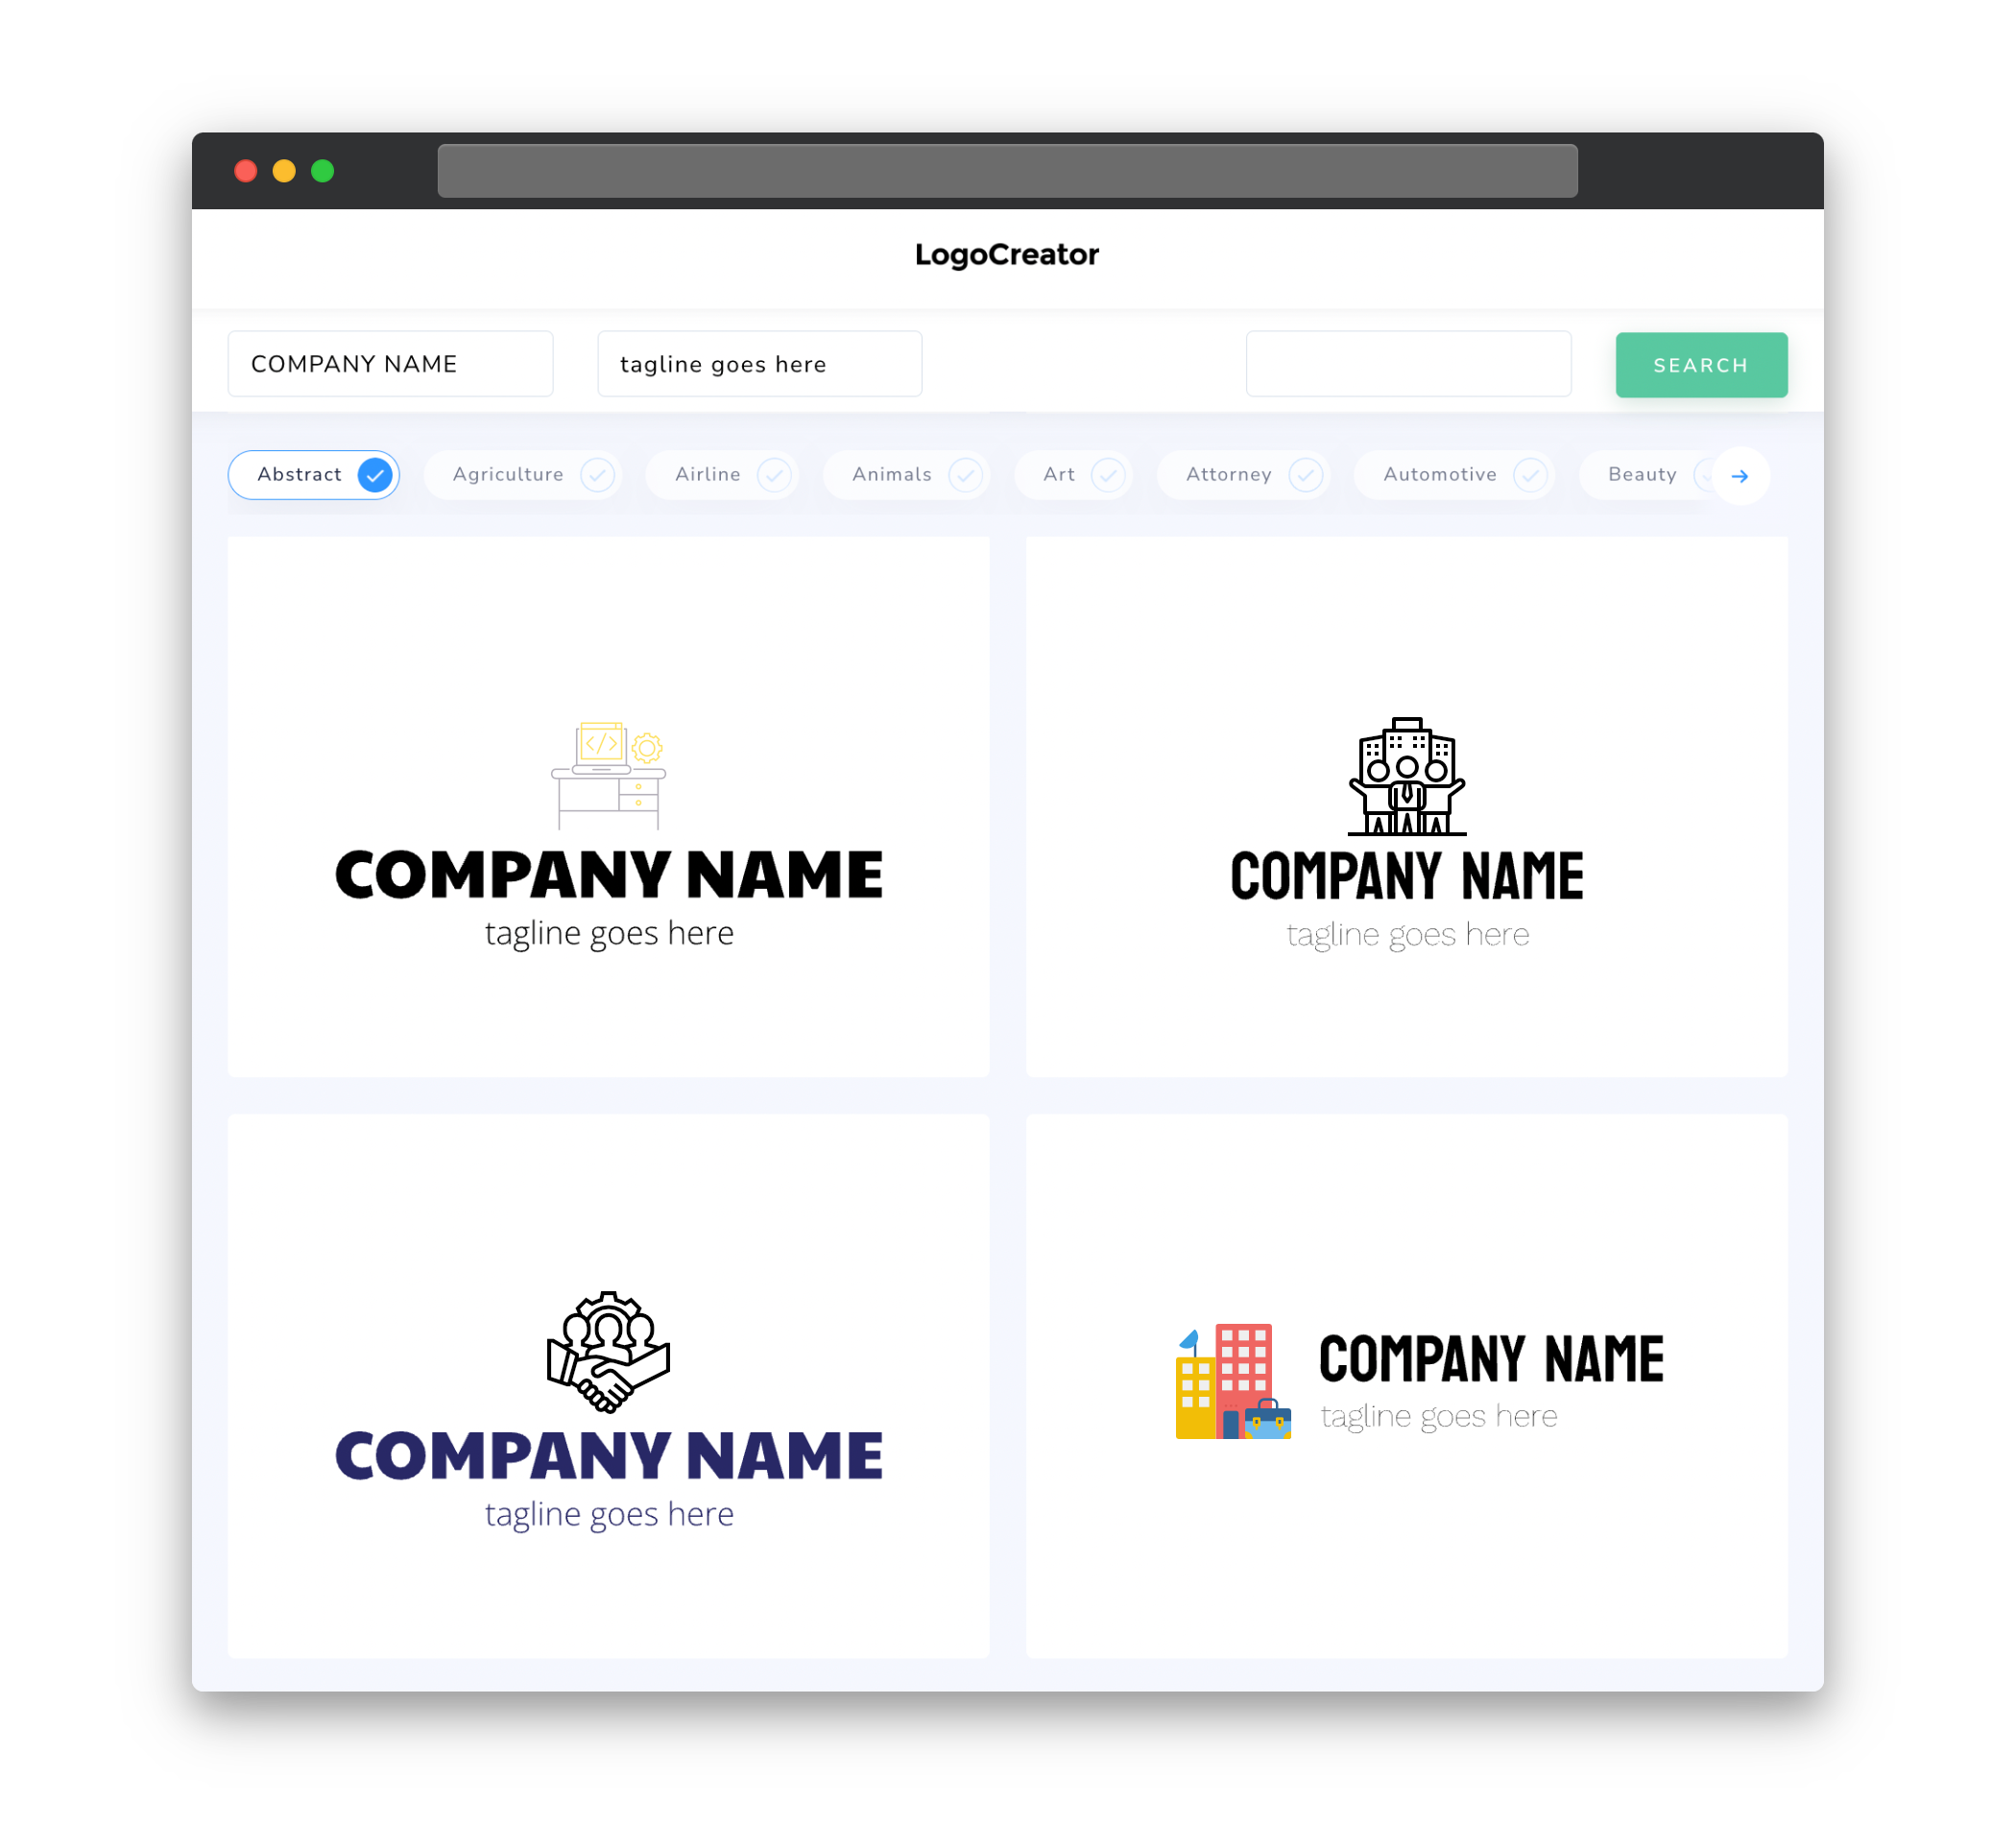 Corporation Logo Design: Create Your Own Corporation Logos